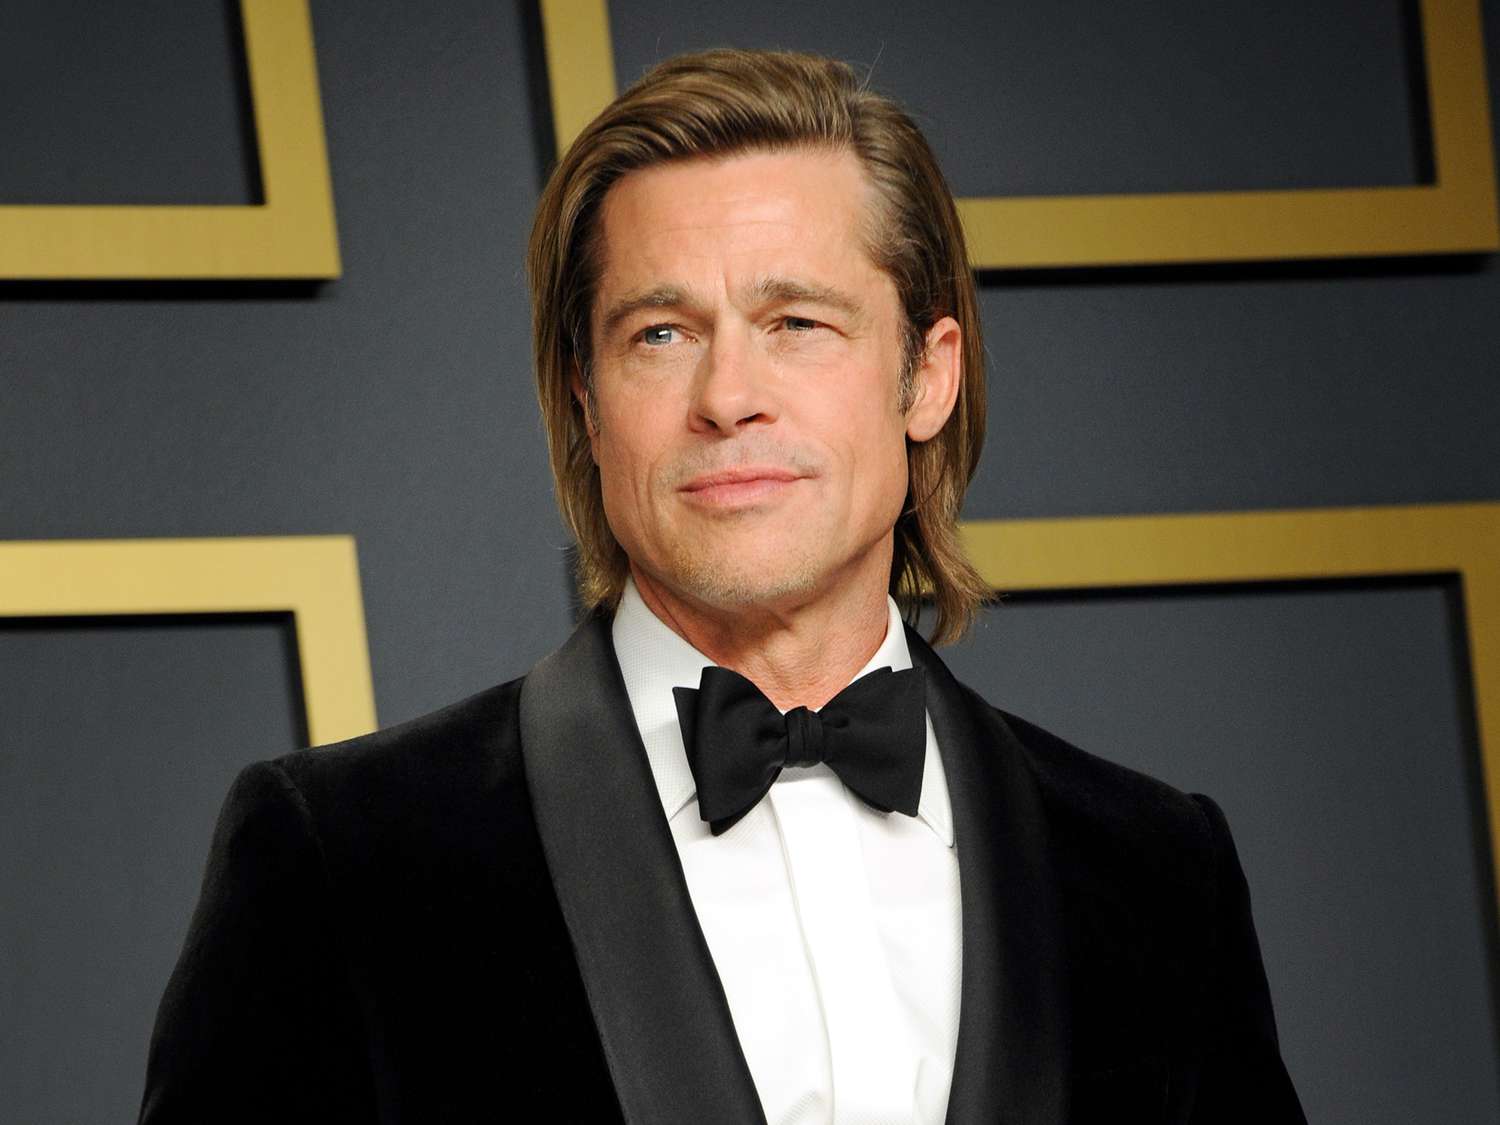 Brad Pitt wearing a black suit